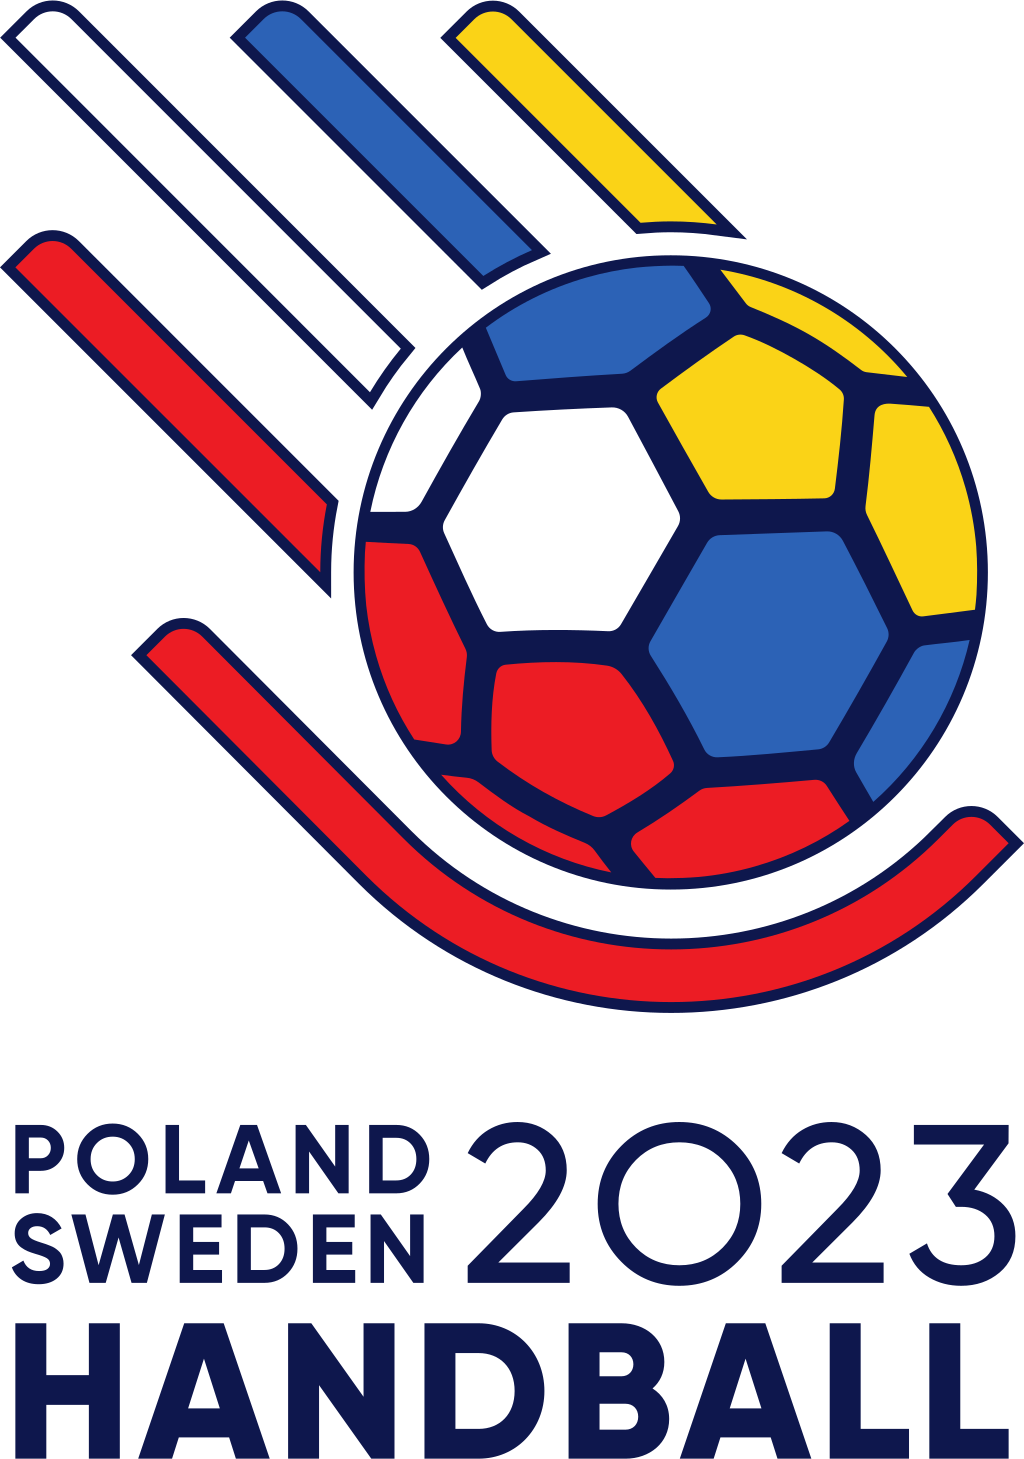 IHF  Poland/Sweden 2023 – One year to go